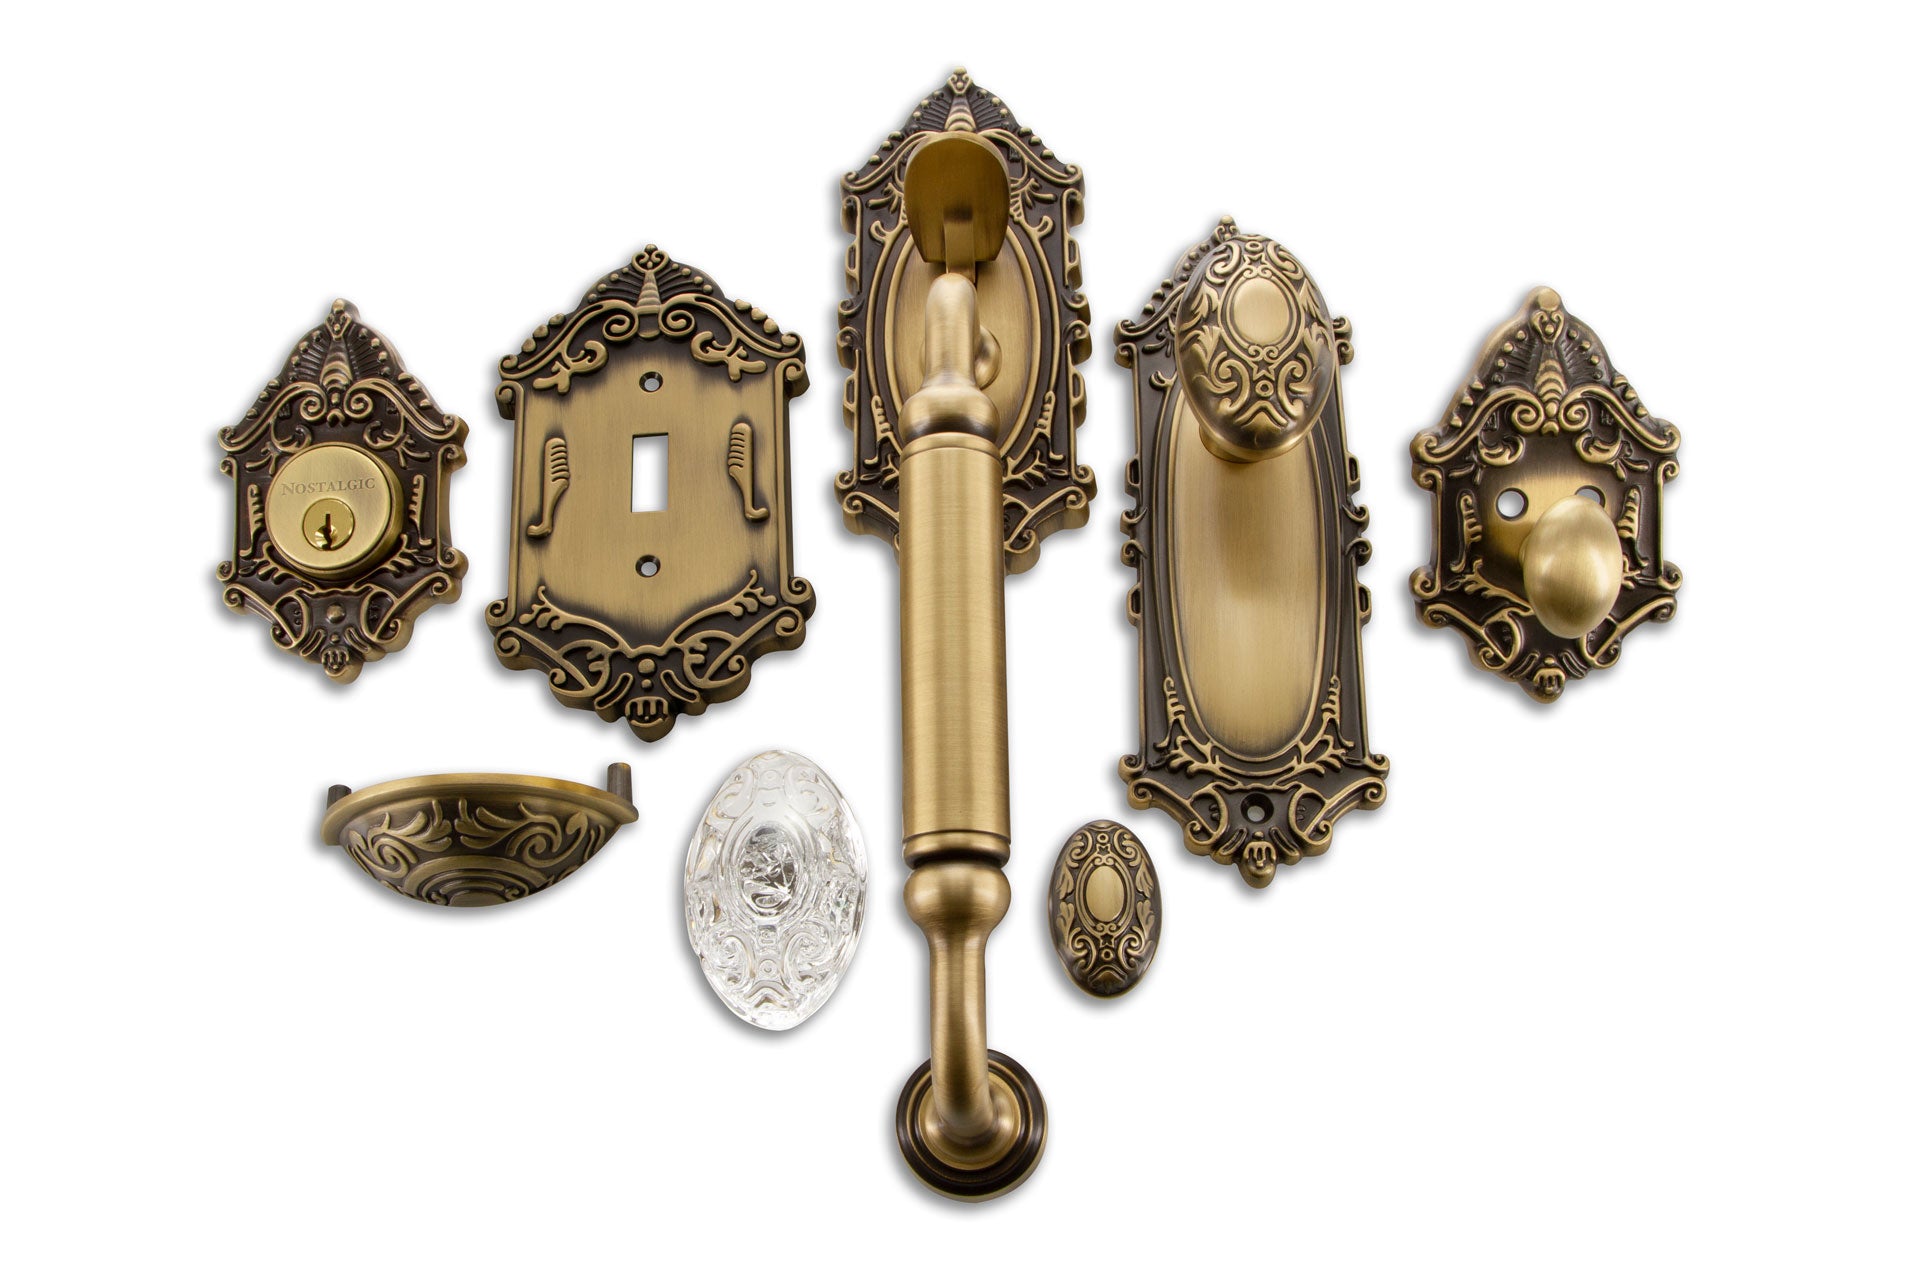 Victorian Collection Nostalgic Warehouse vintage inspired antique brass door hardware